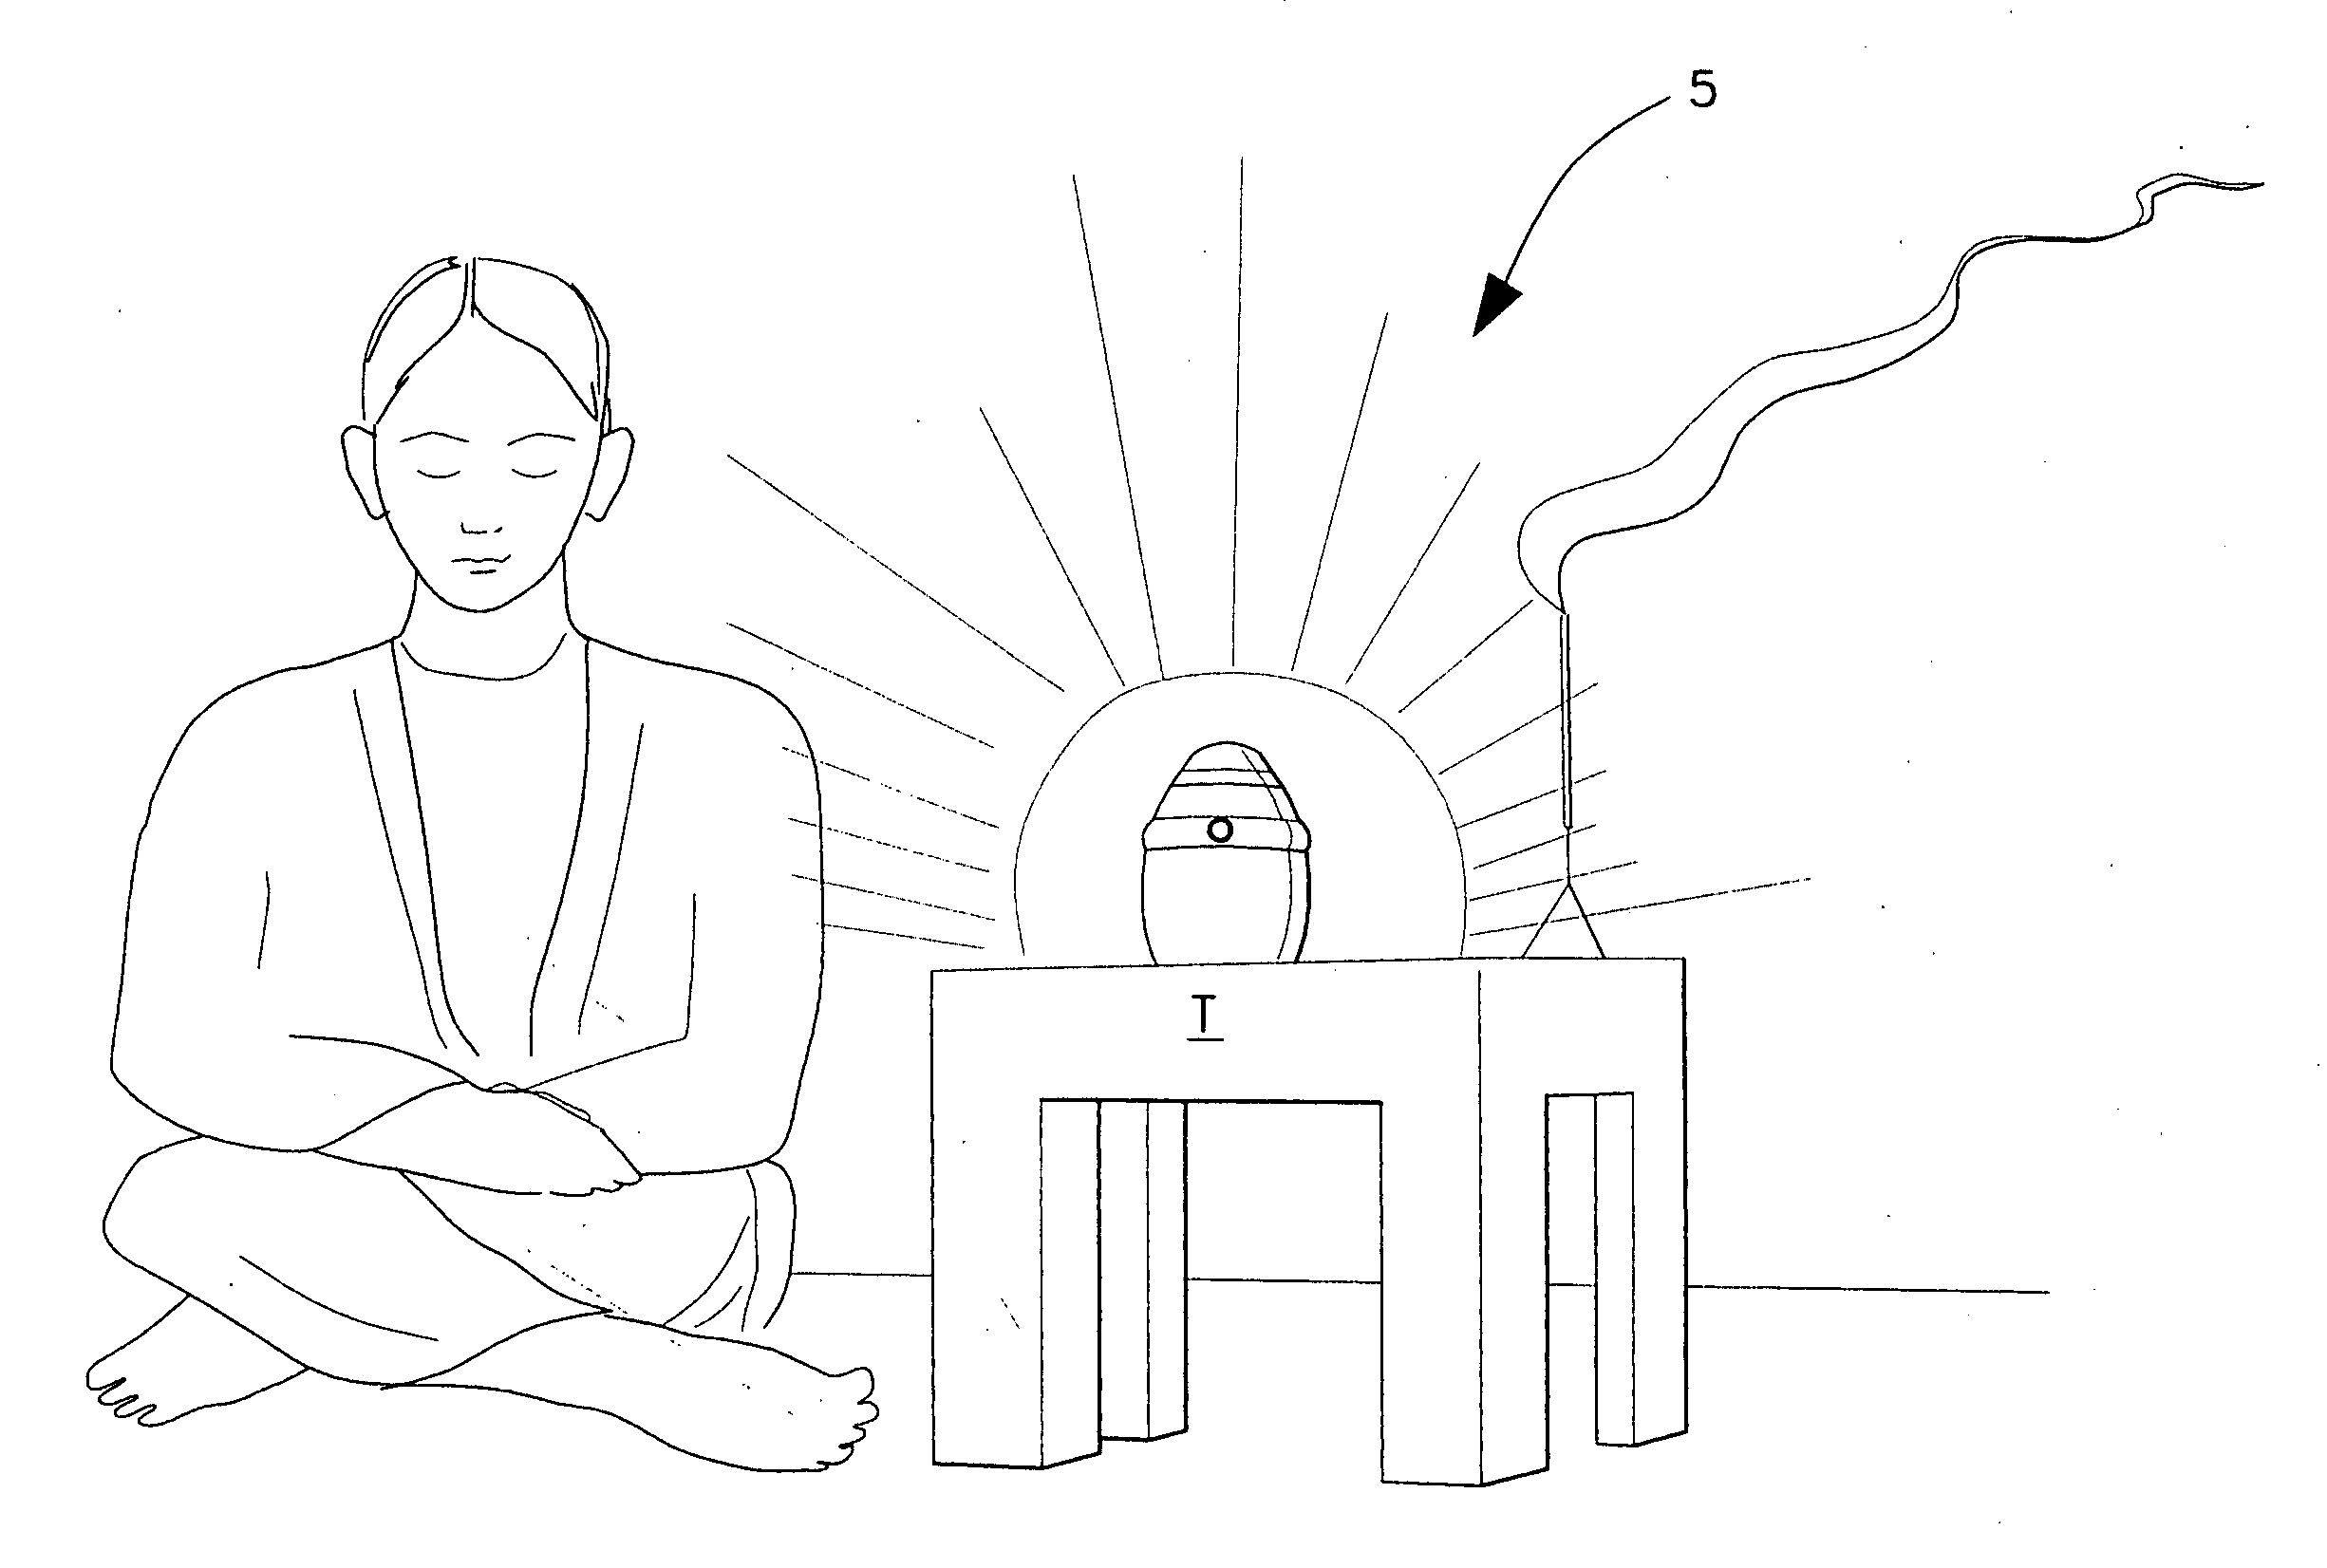 Activity timer for meditation